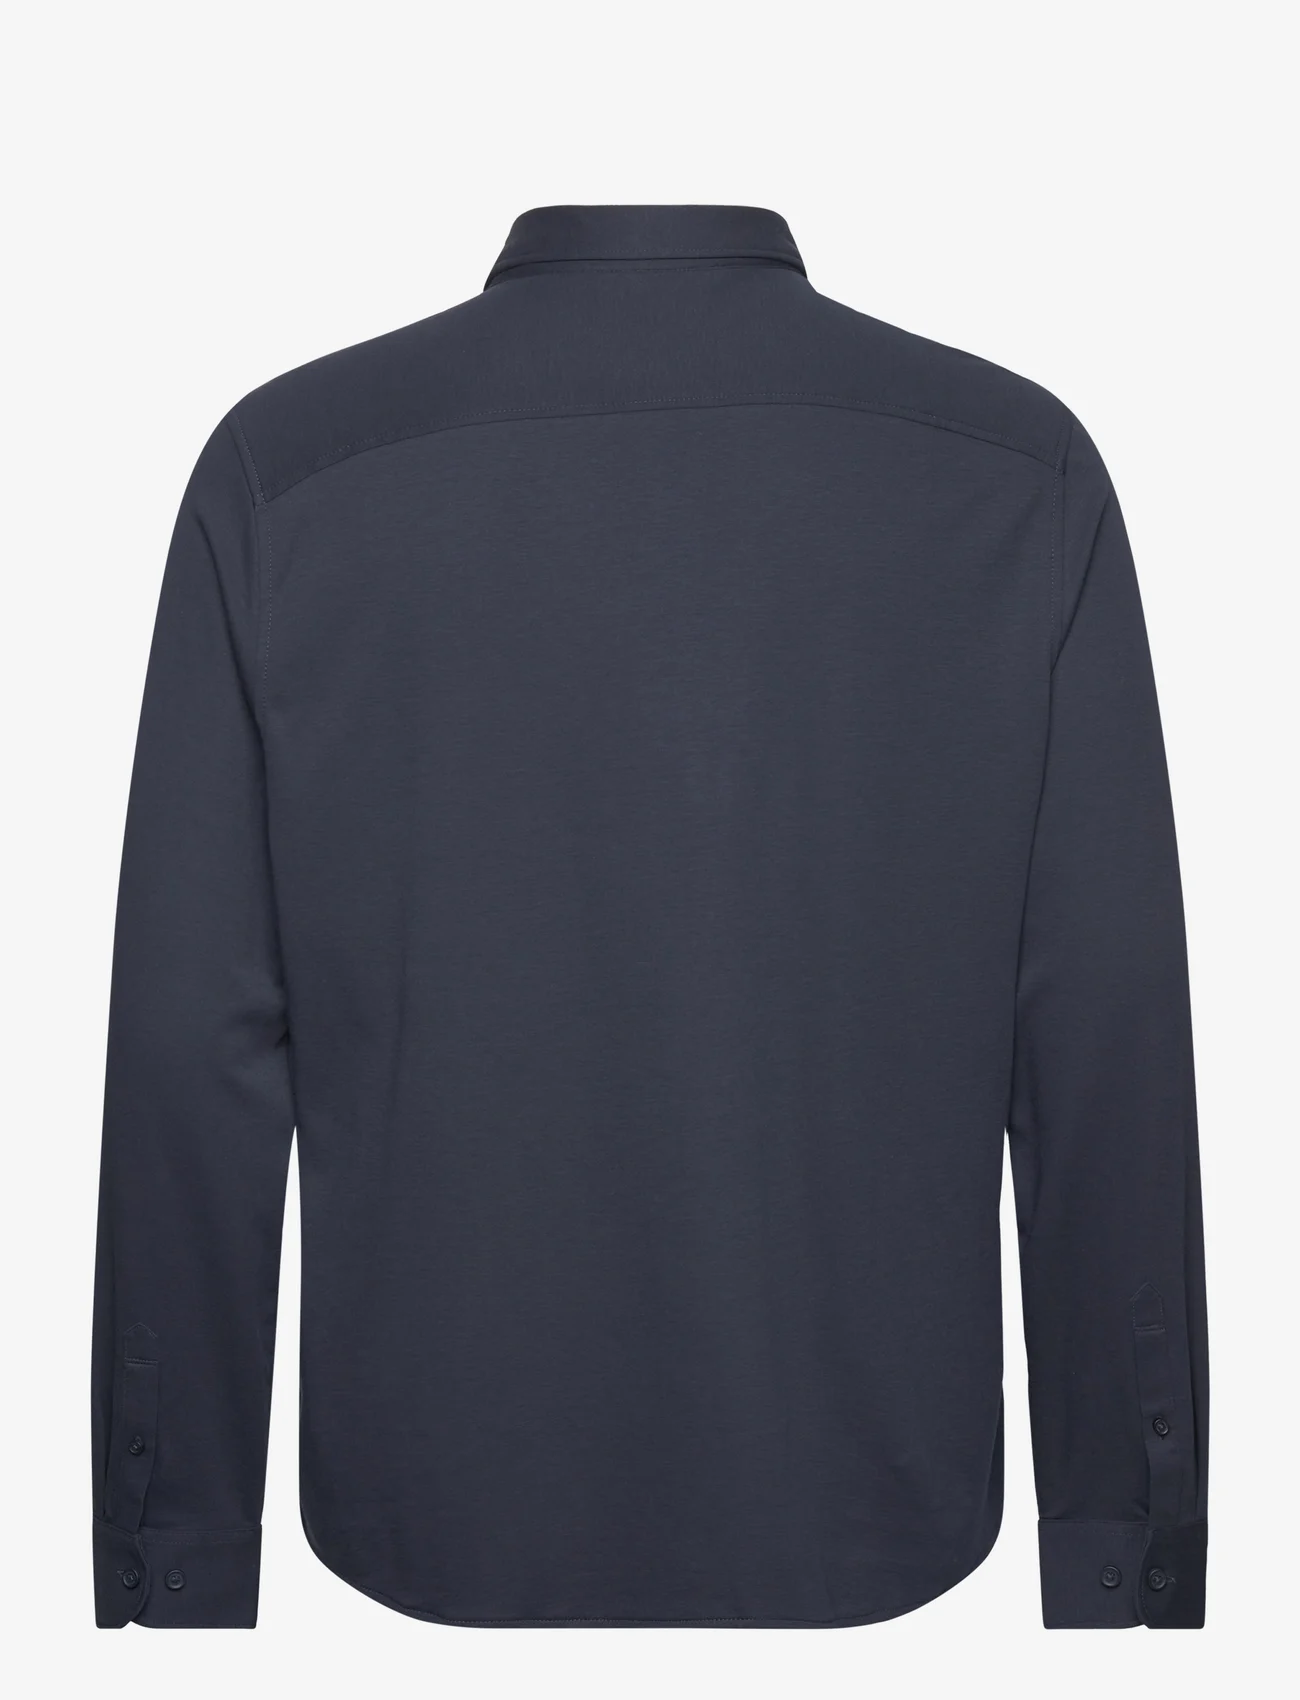 Original Penguin - LS BUTTON FRONT SHIR - basic skjorter - dark sapphire - 1